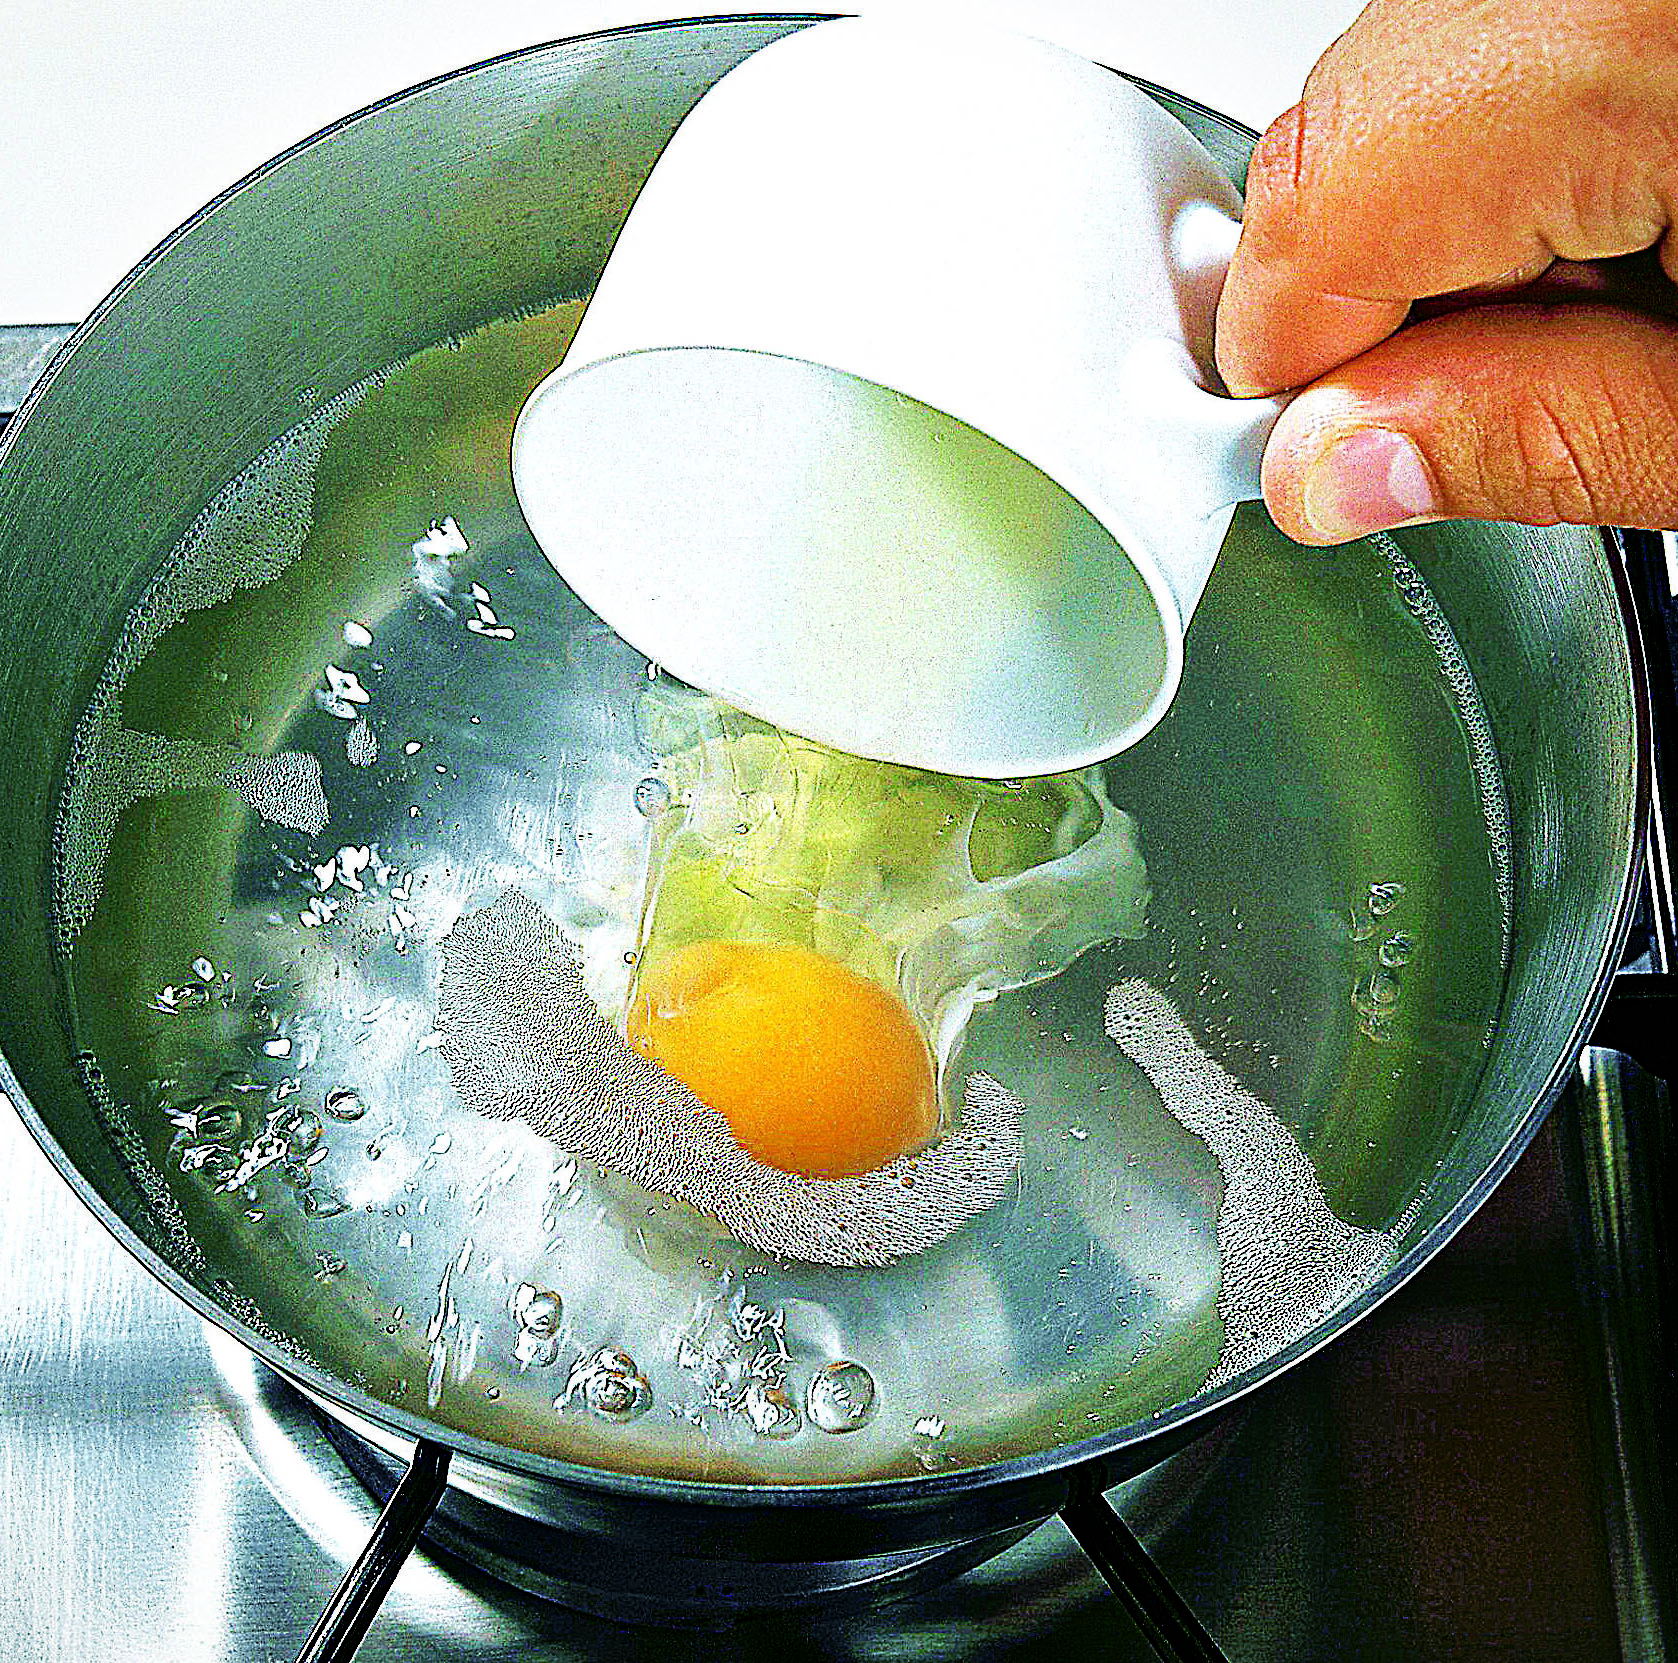 Рецепт яйцо пашот в домашних условиях кастрюле. Яйцо пашот в мешочке. Варка яиц пашот. Яйцо пашот в кипящую воду. Яйцо пашот в кастрюле.